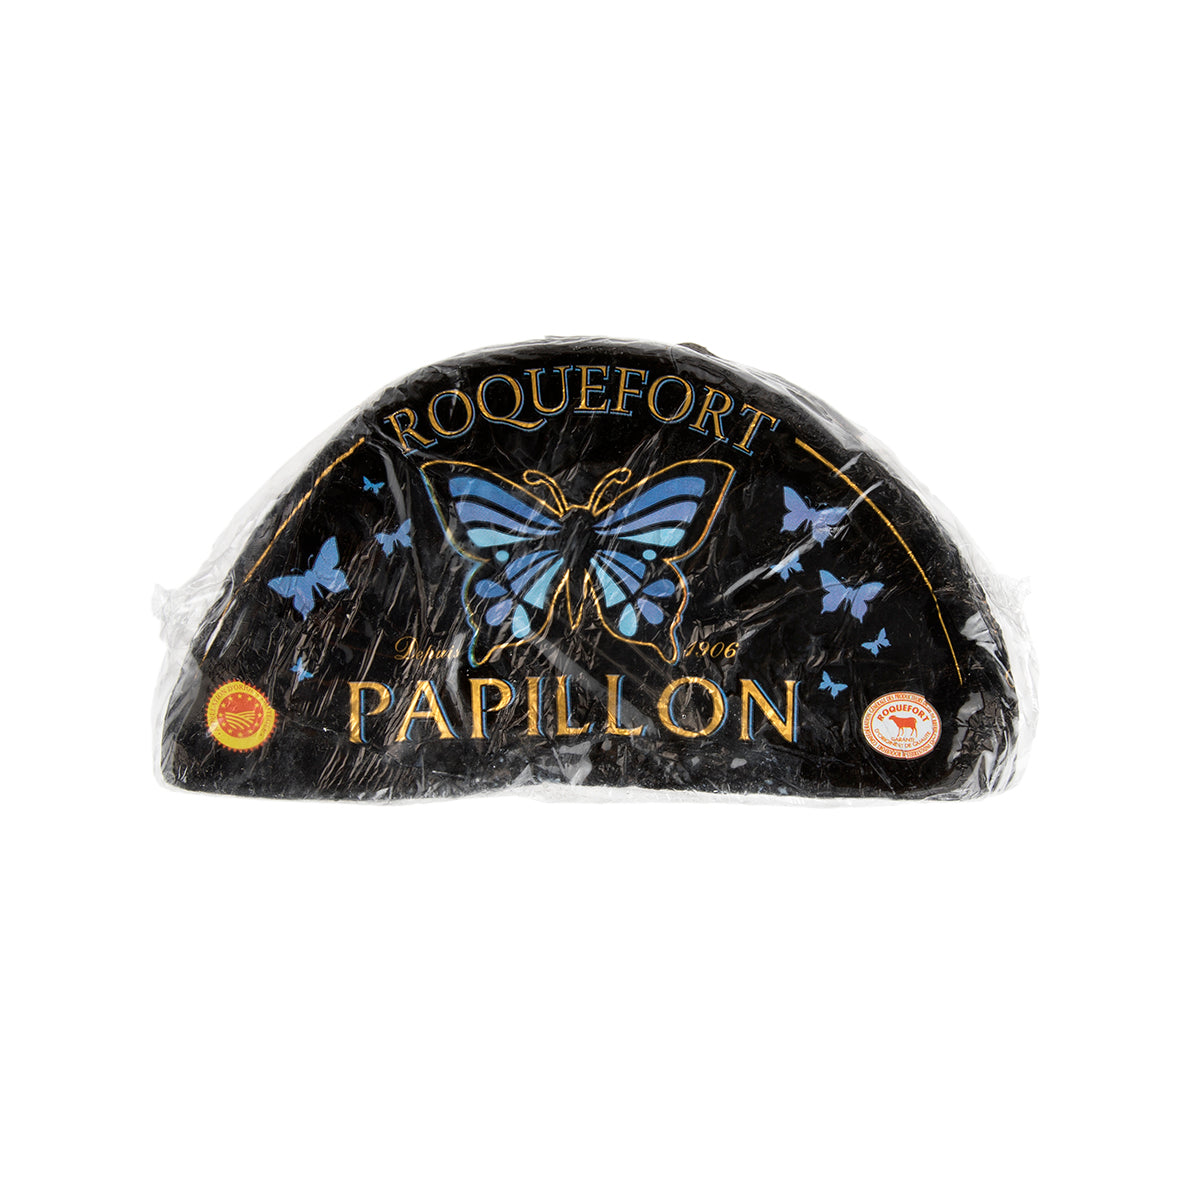 Papillion Roquefort